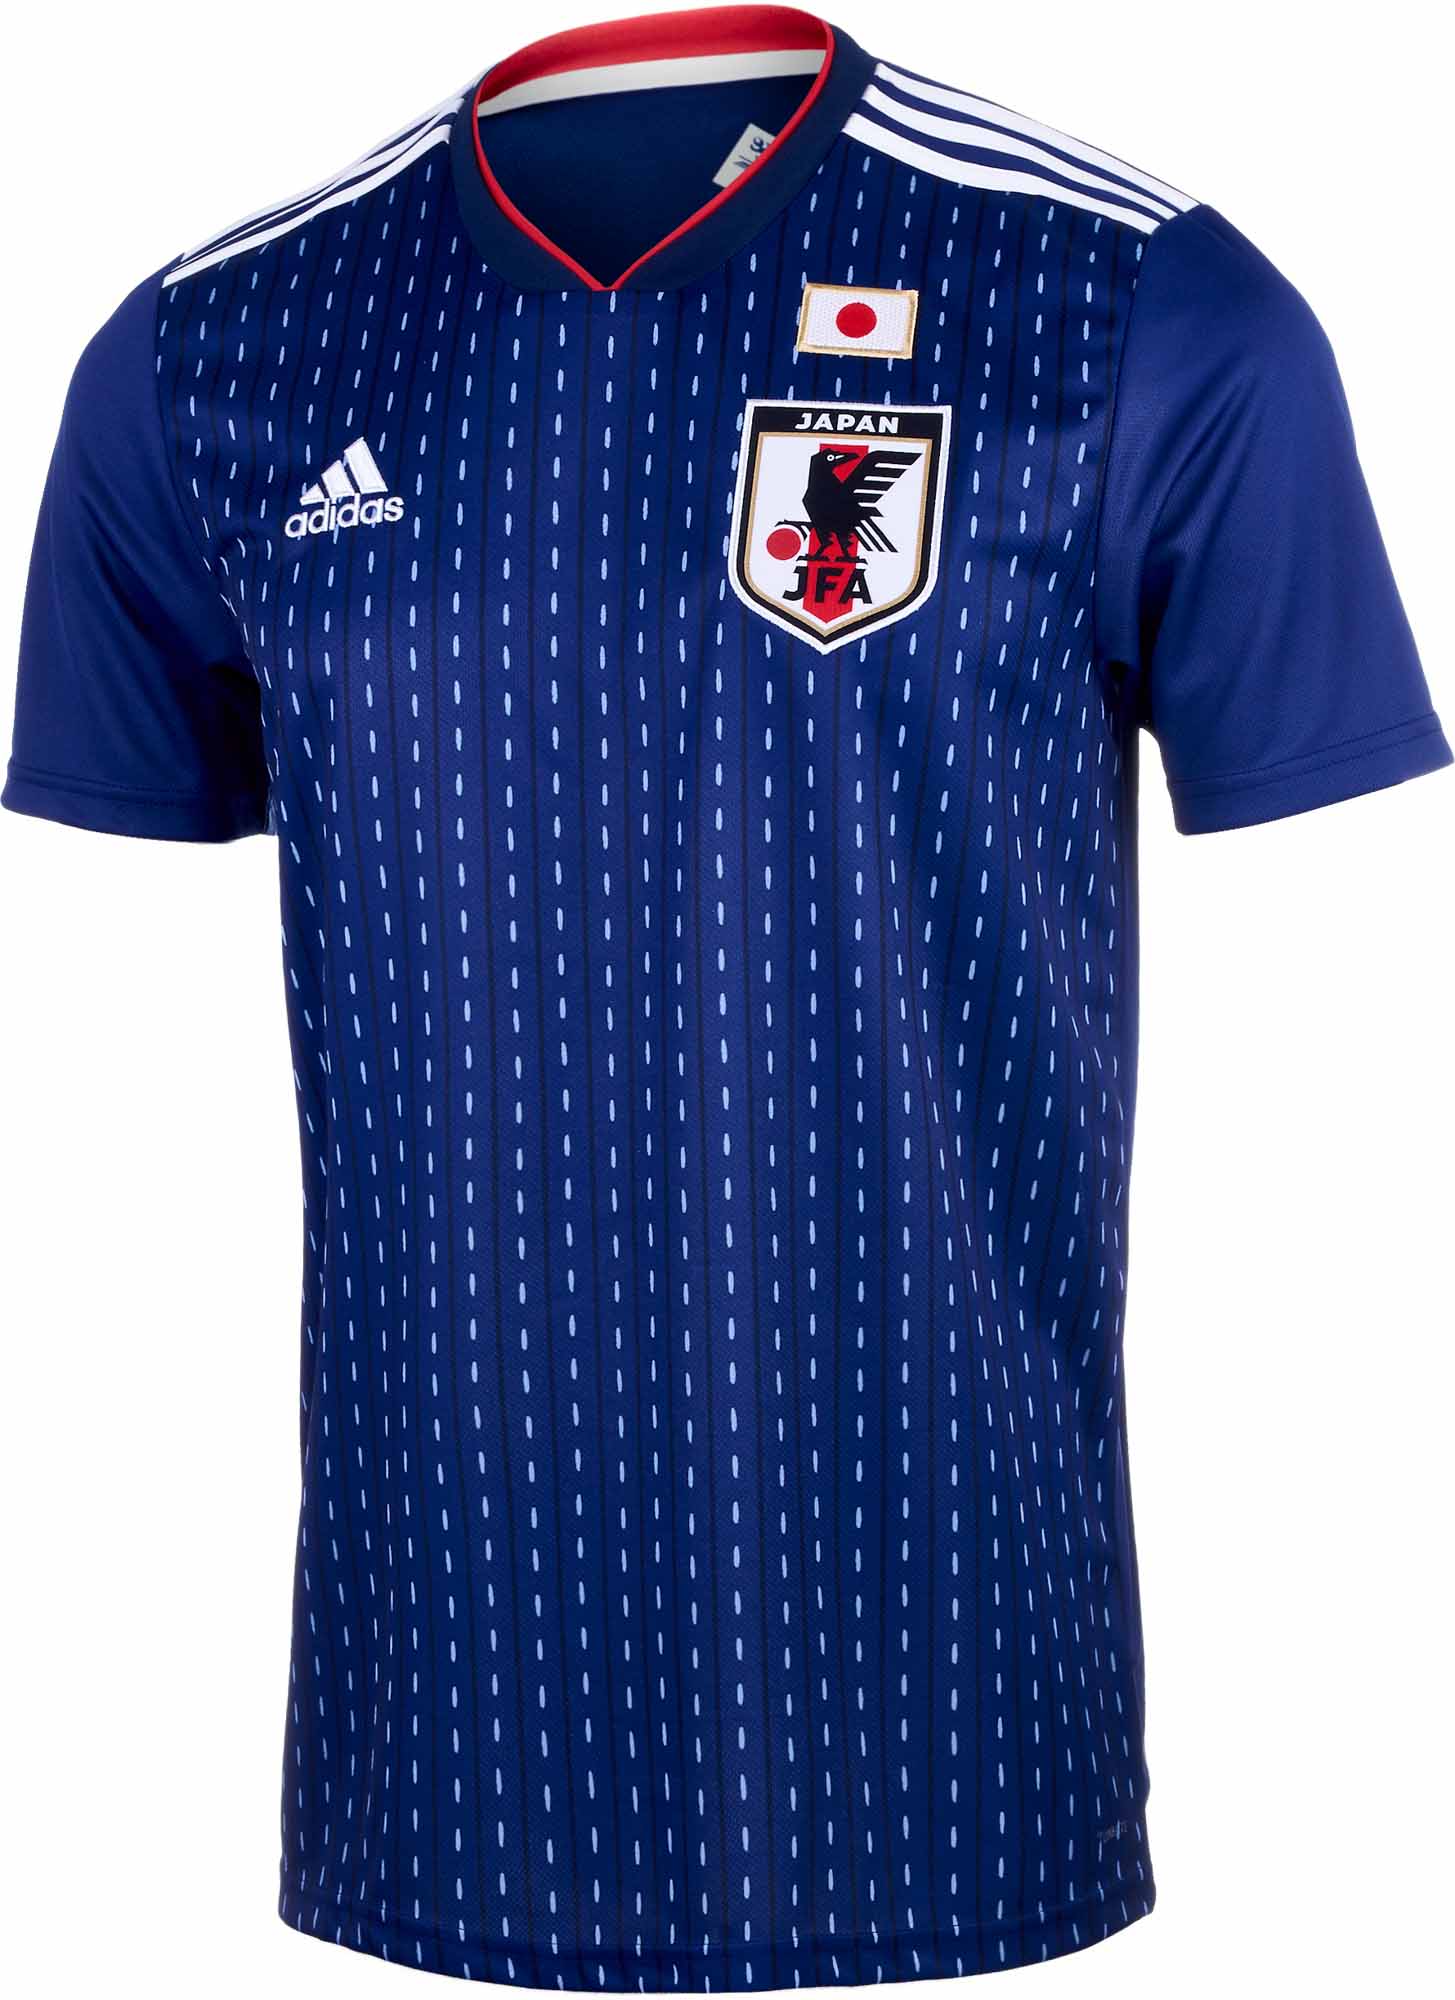 adidas japan football jersey